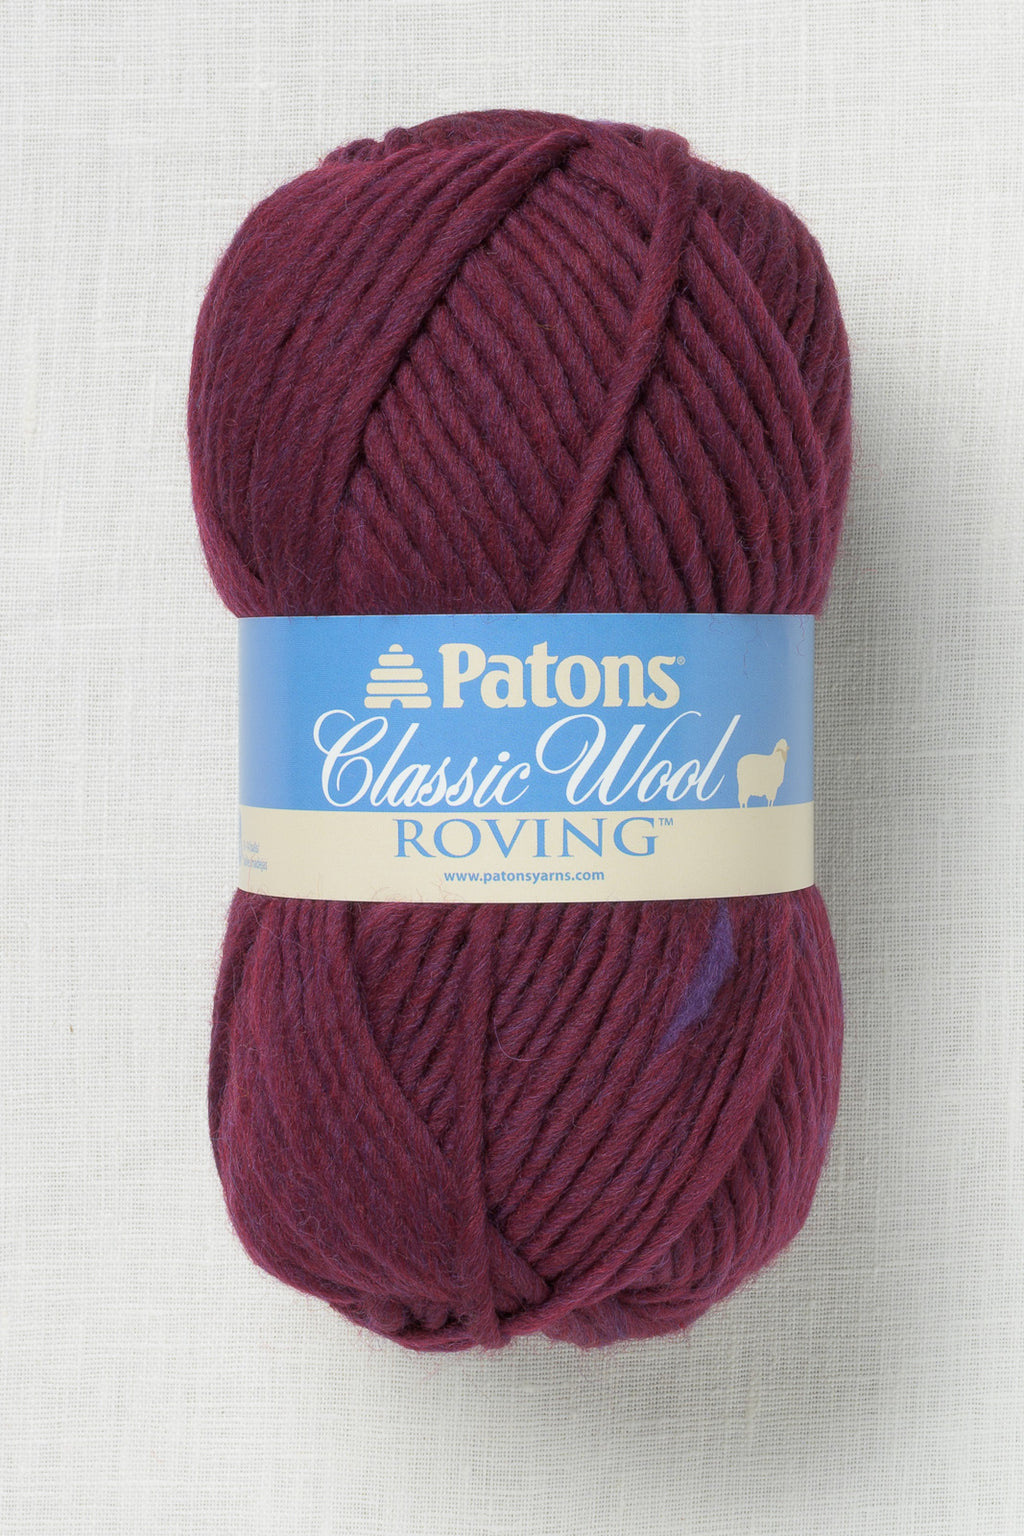 Patons Classic Wool Roving Plum